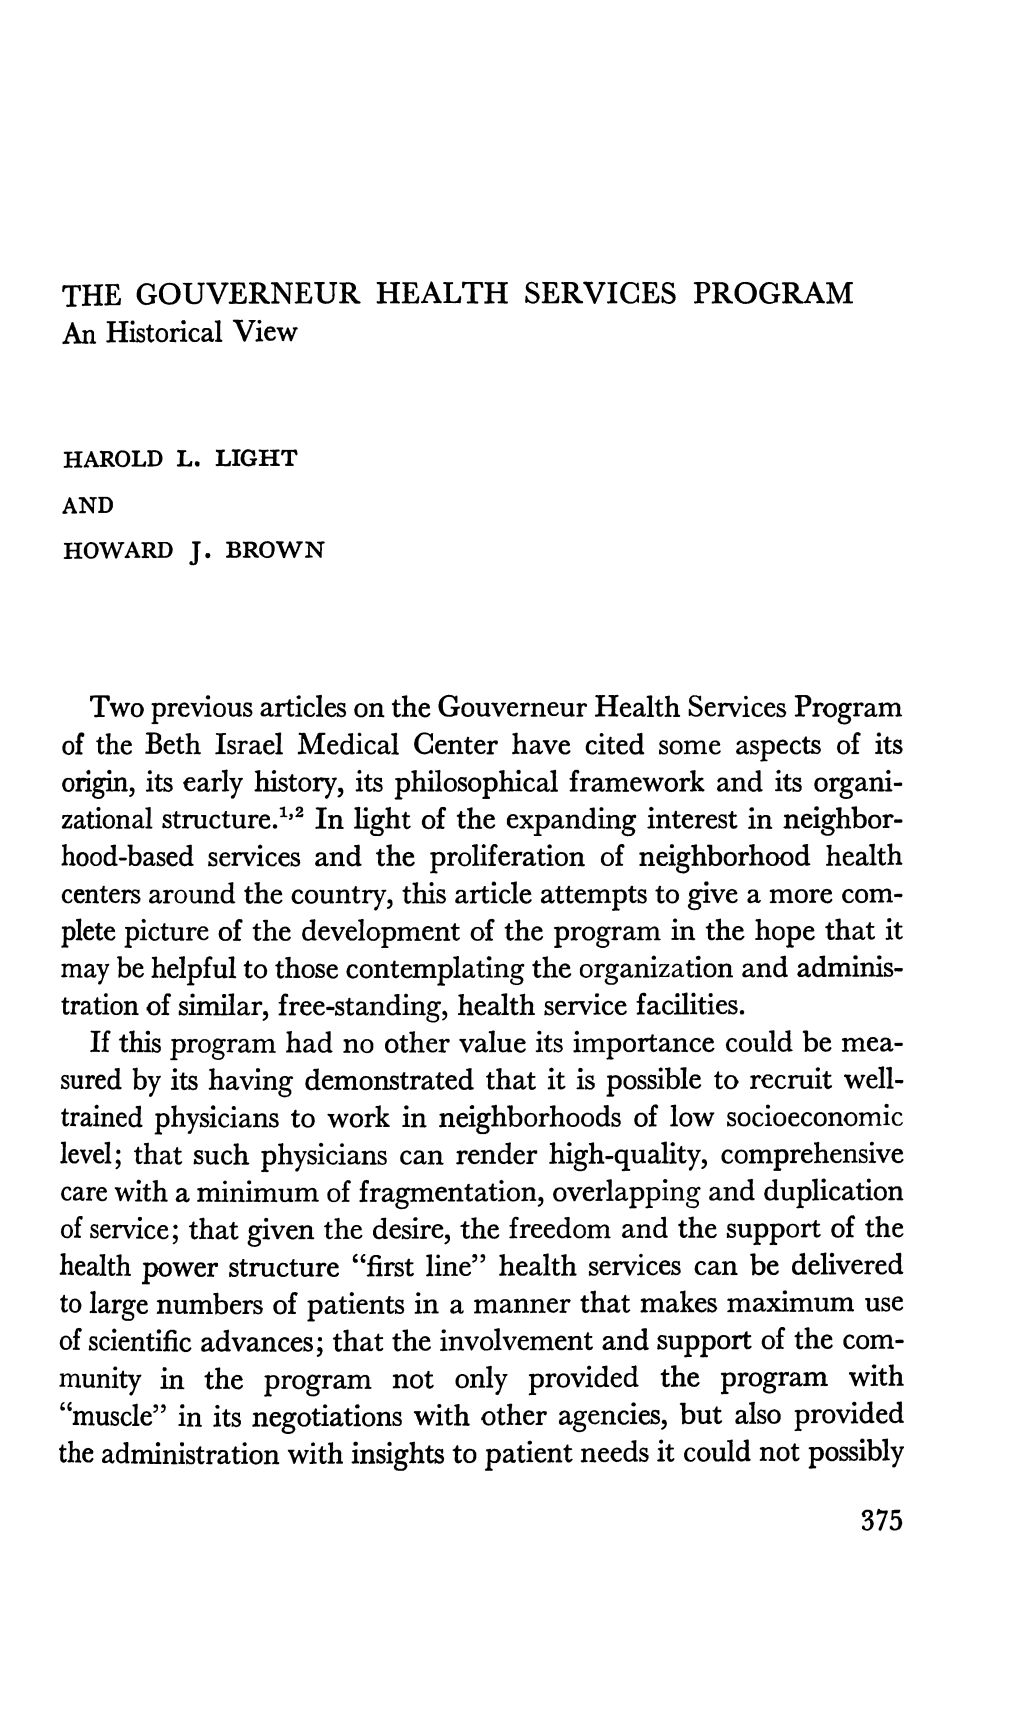 THE GOUVERNEUR HEALTH SERVICES PROGRAM an Historical View